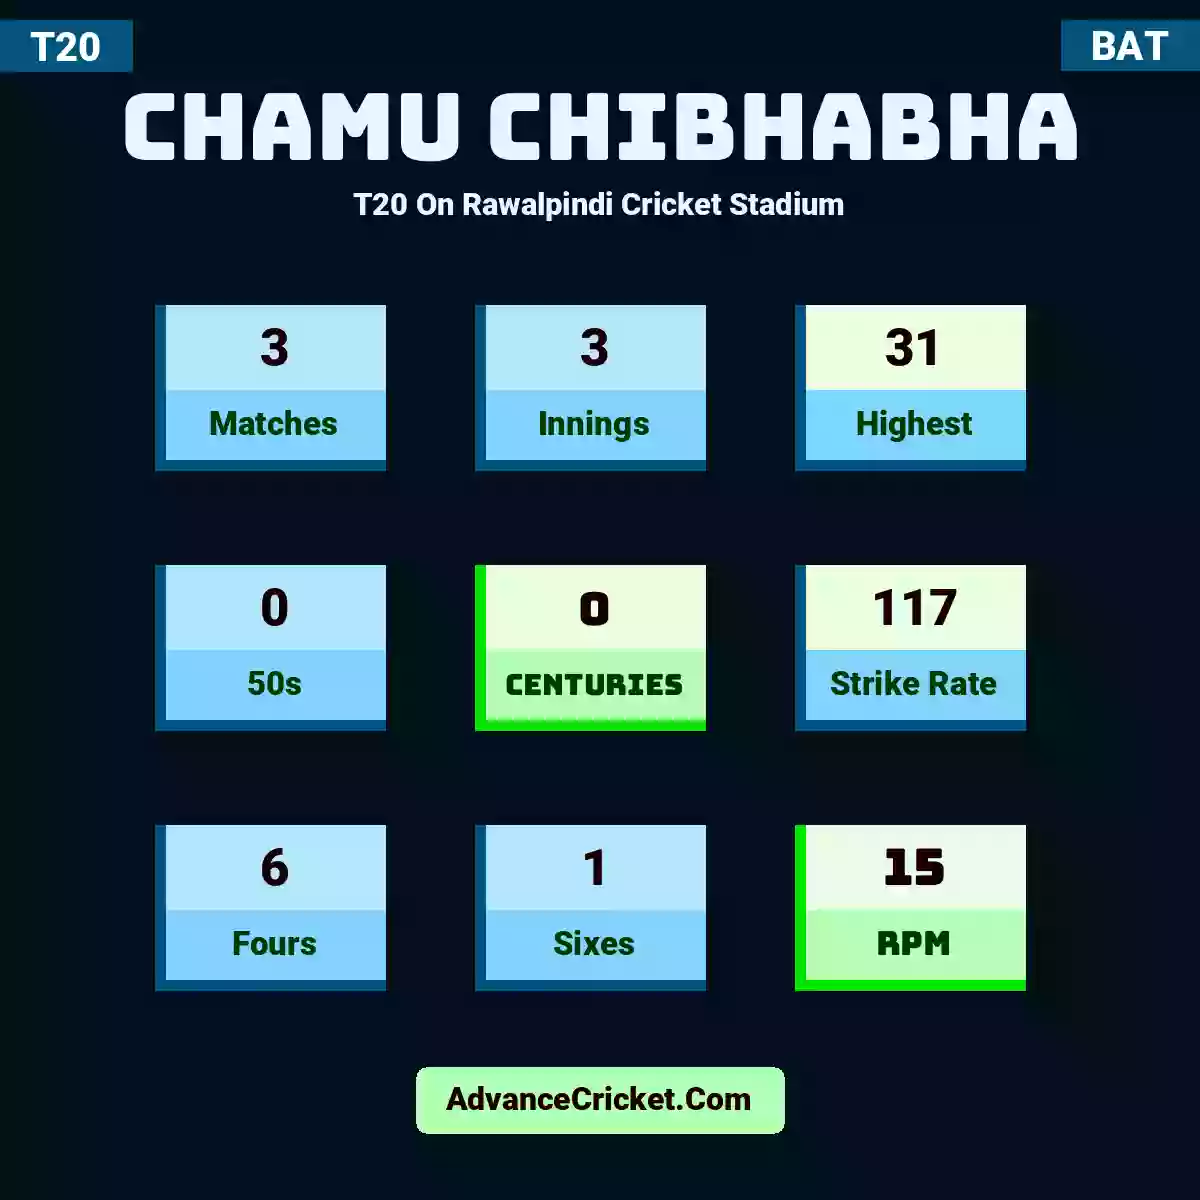 Chamu Chibhabha T20  On Rawalpindi Cricket Stadium, Chamu Chibhabha played 3 matches, scored 31 runs as highest, 0 half-centuries, and 0 centuries, with a strike rate of 117. C.Chibhabha hit 6 fours and 1 sixes, with an RPM of 15.